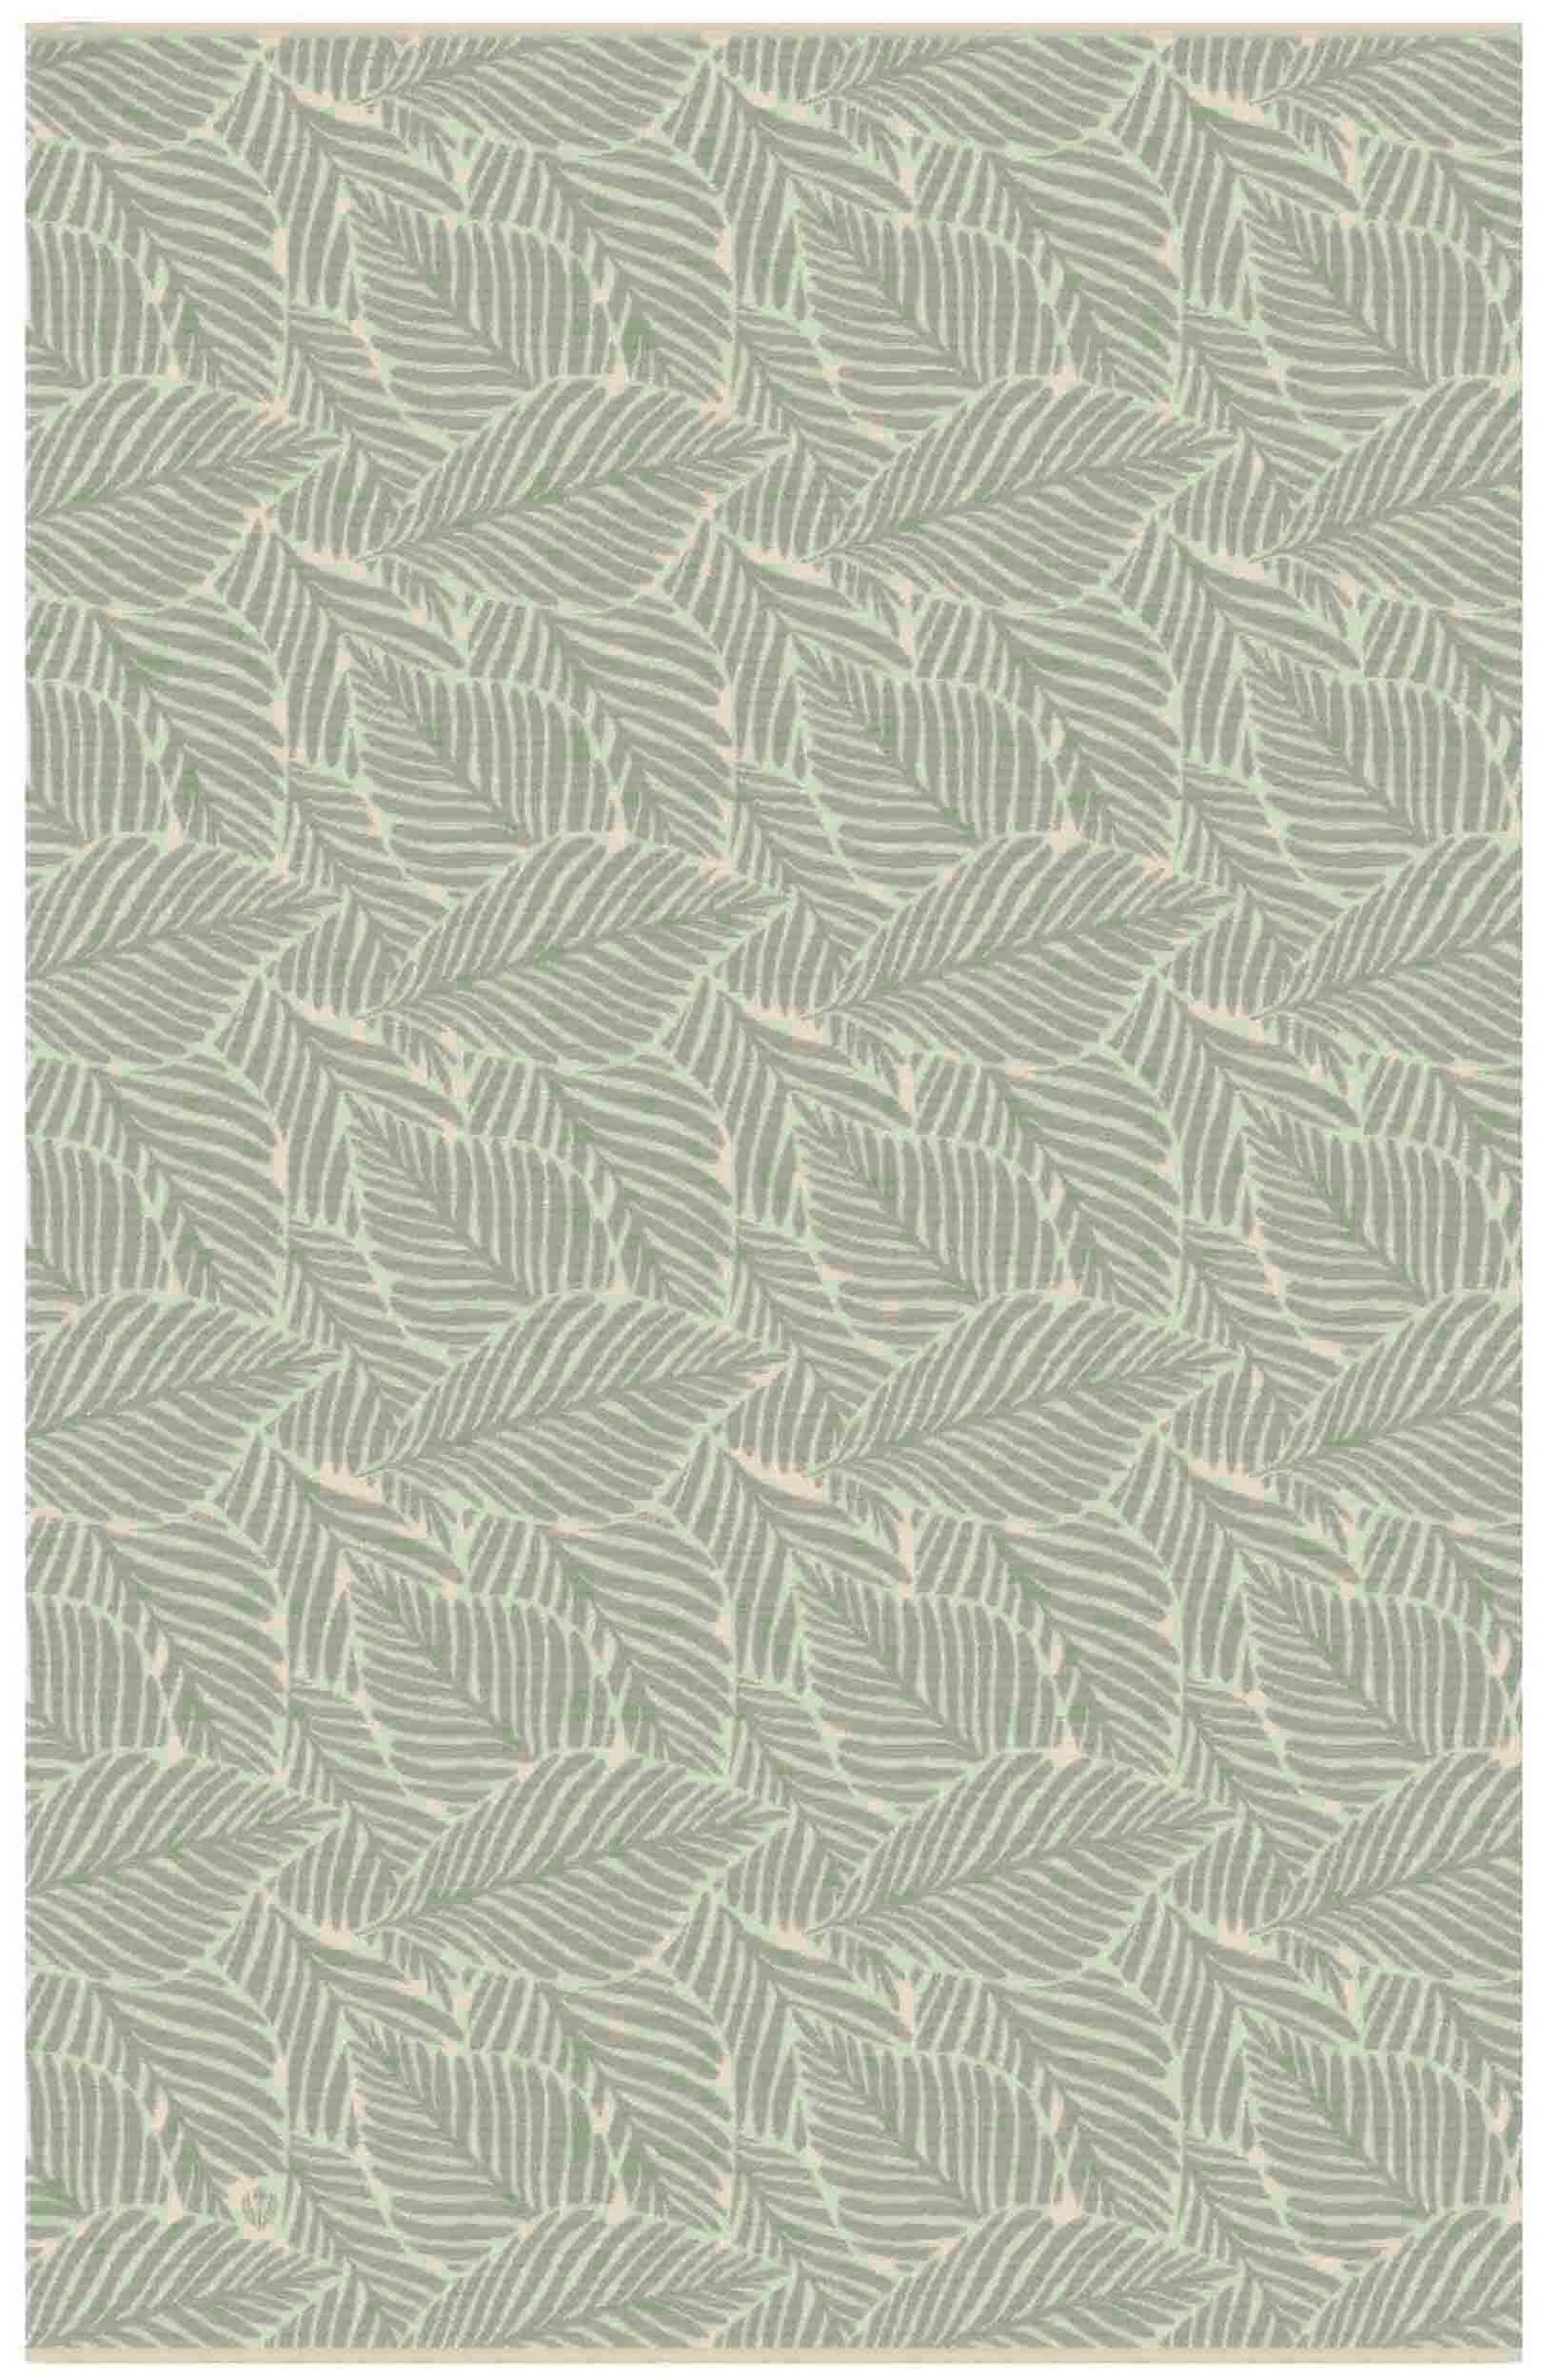 - Made mit Decke, Germany Fraas, Baumwolle Plaid in Blätter-Design Decke FRAAS